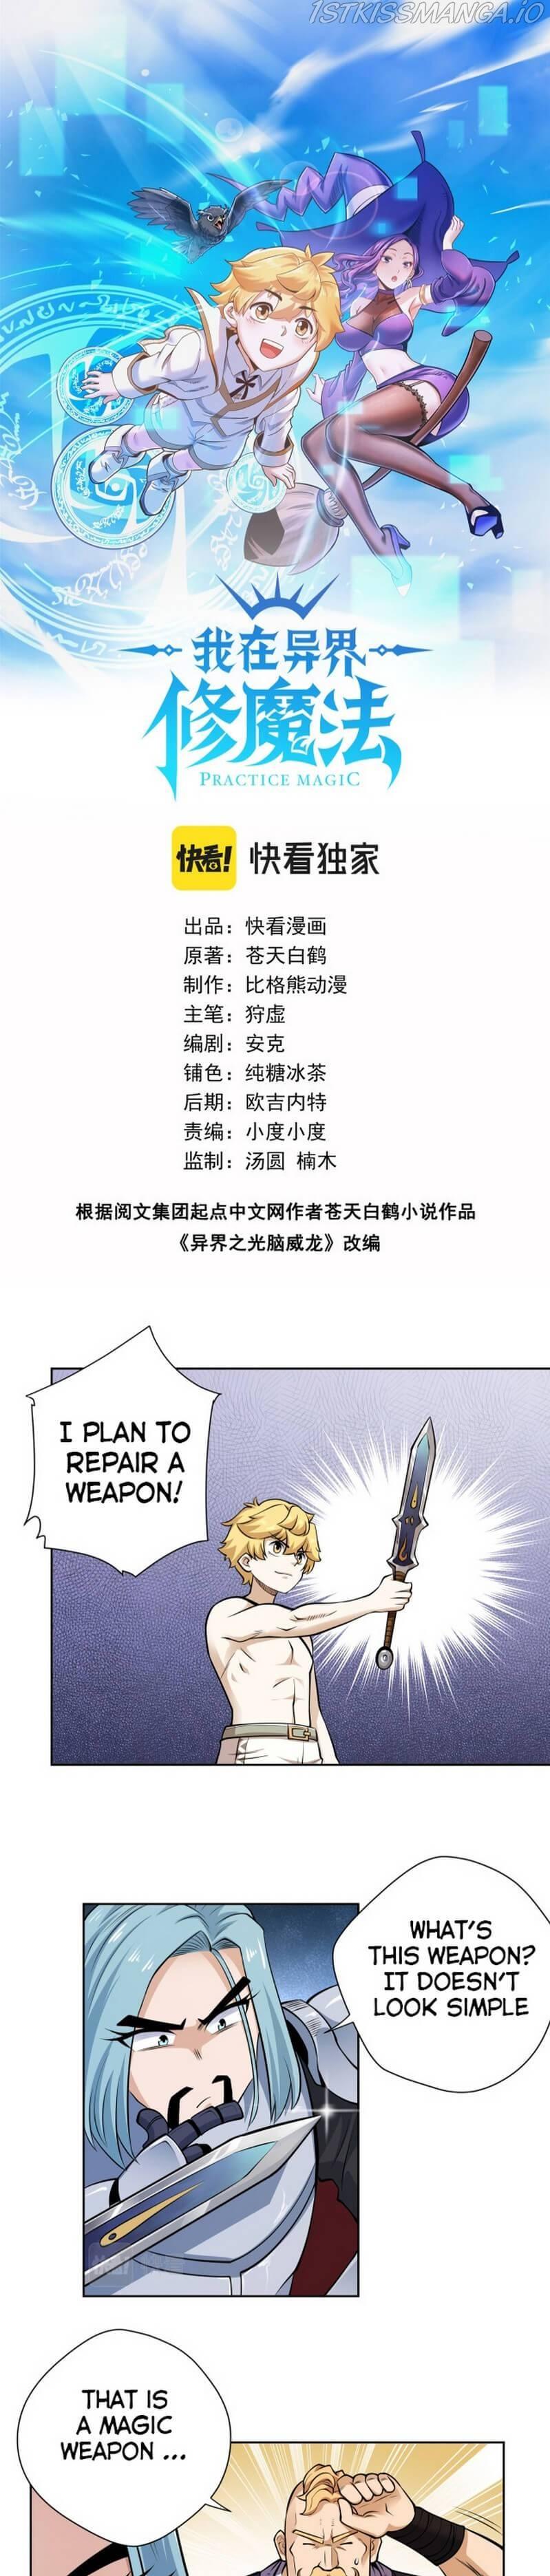 Supreme Magic Weapon - Page 2